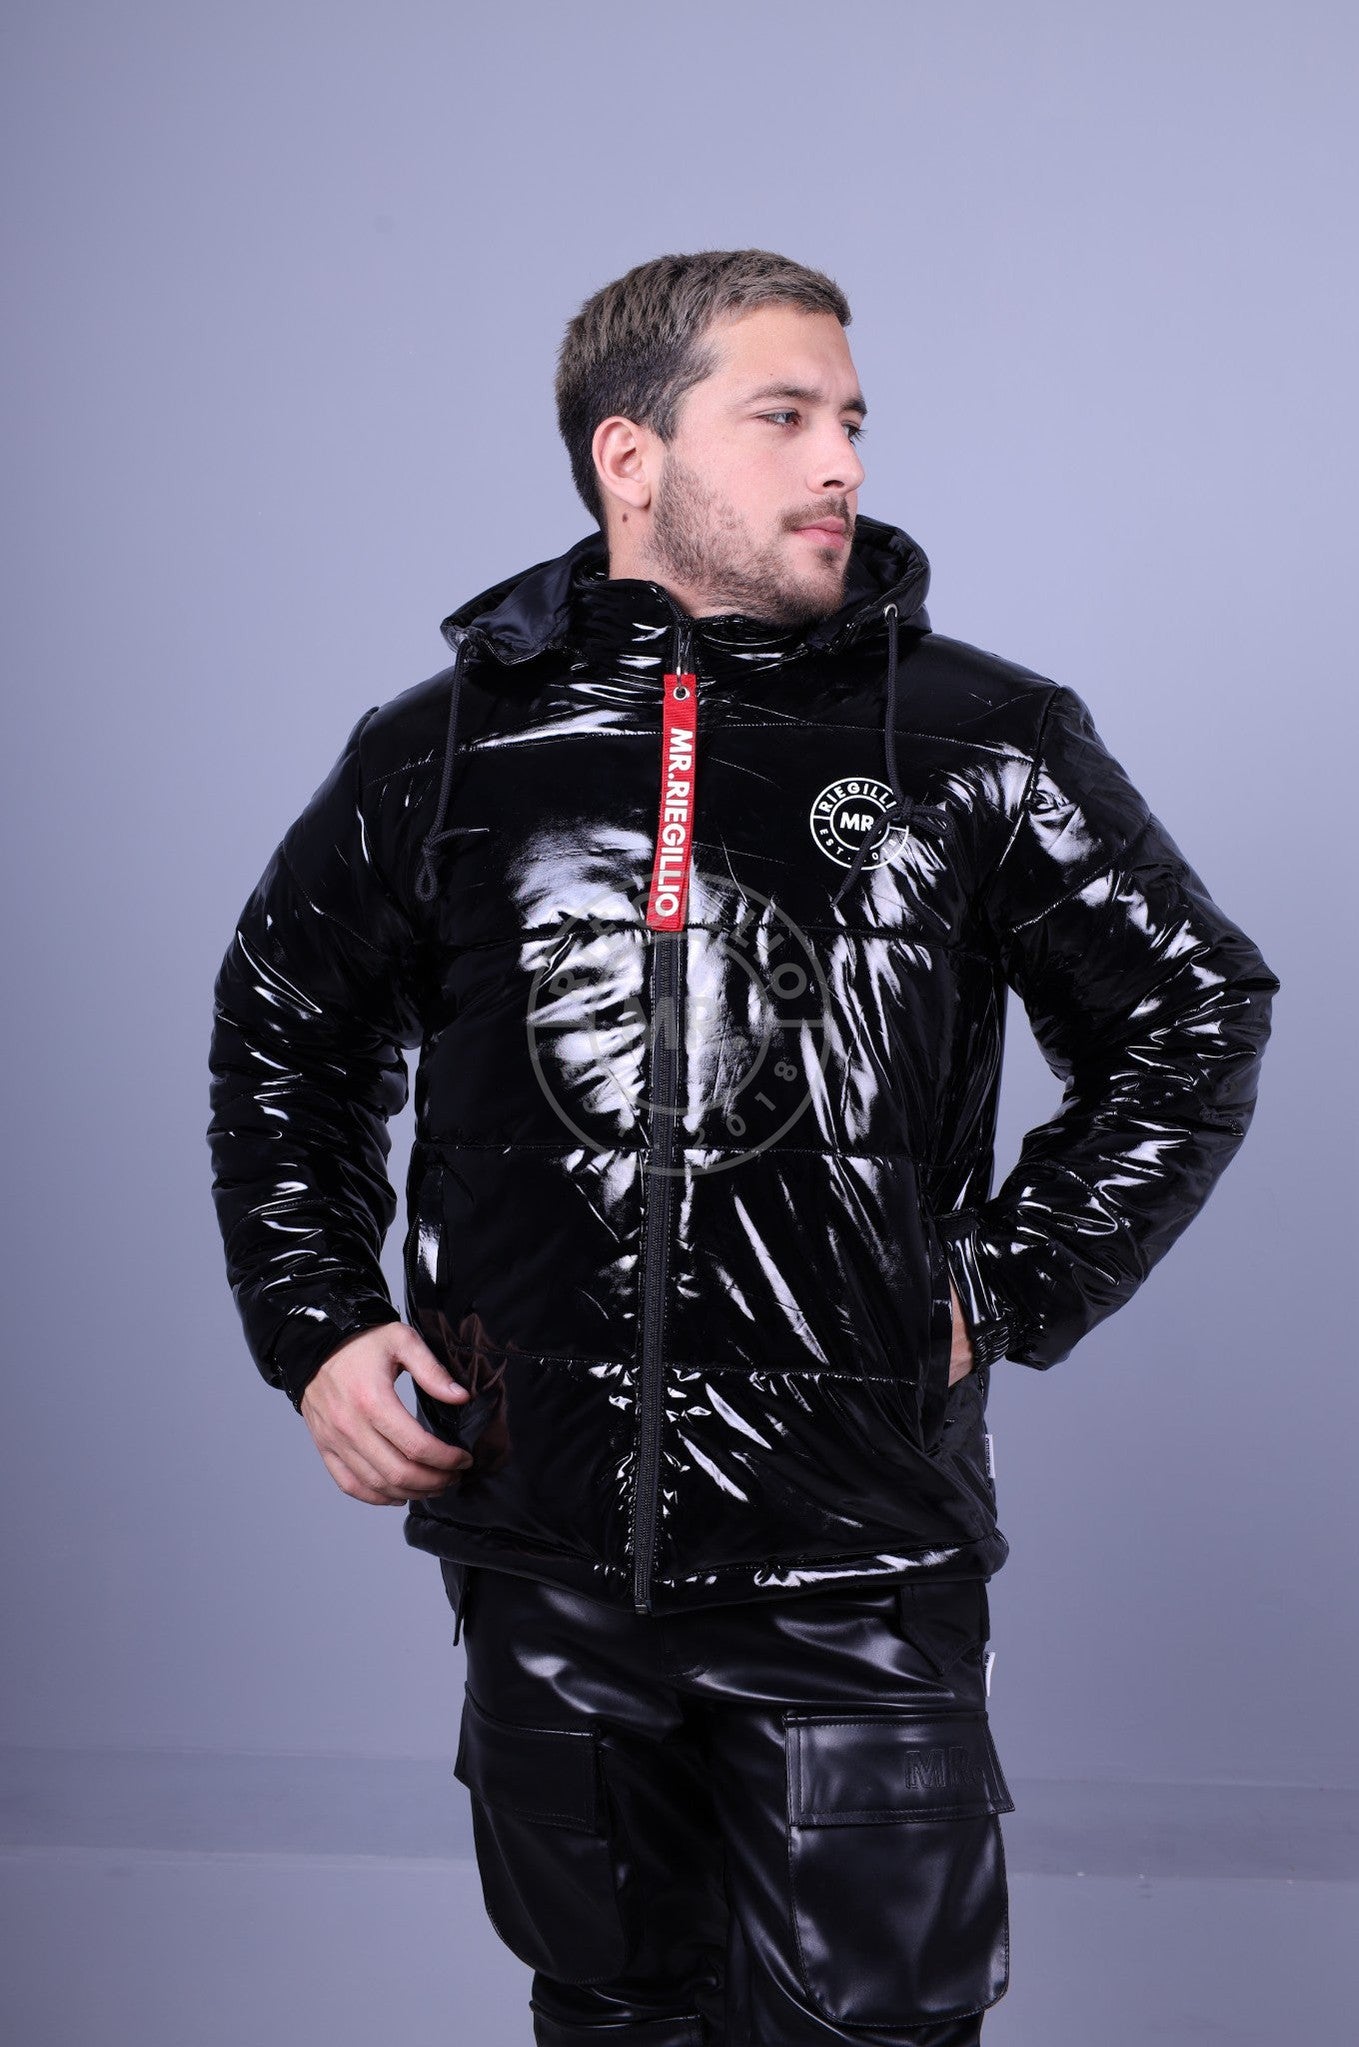 Shop shiny PVC jackets. PVC Fetish gear | MR. Riegillio